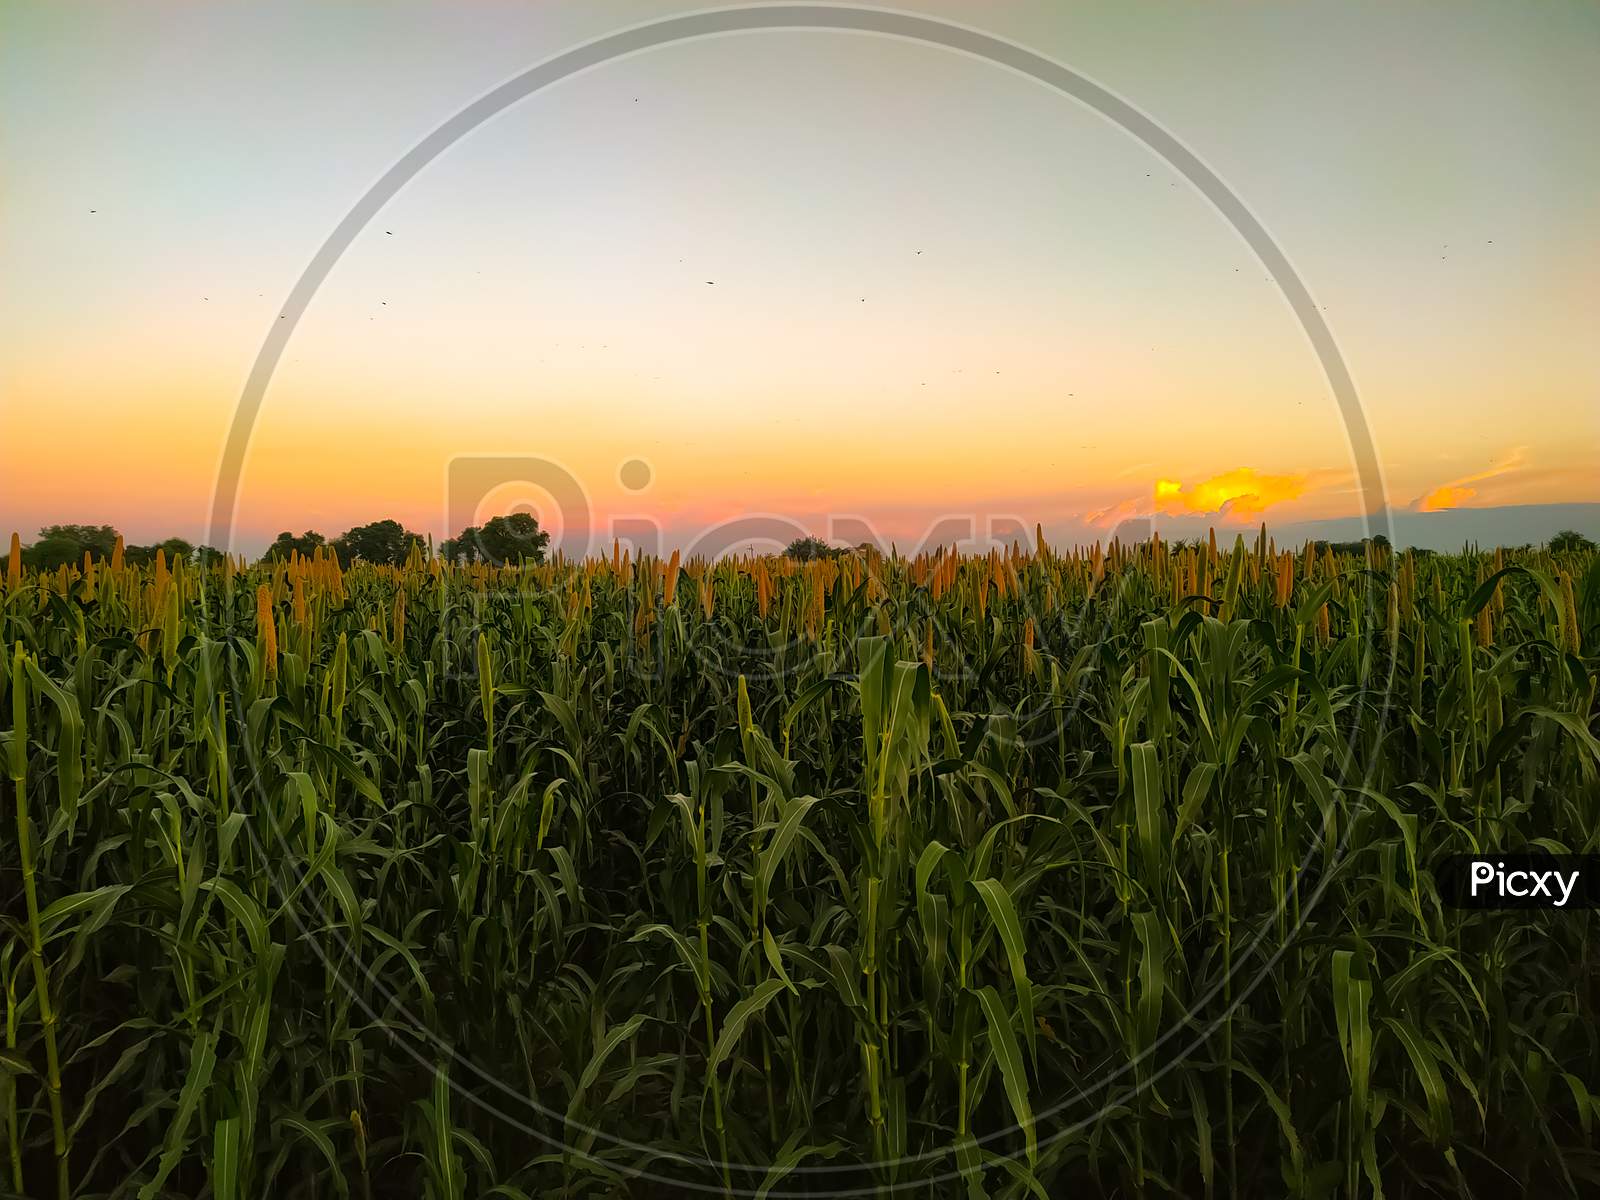 Field of millet on a sunset sky background